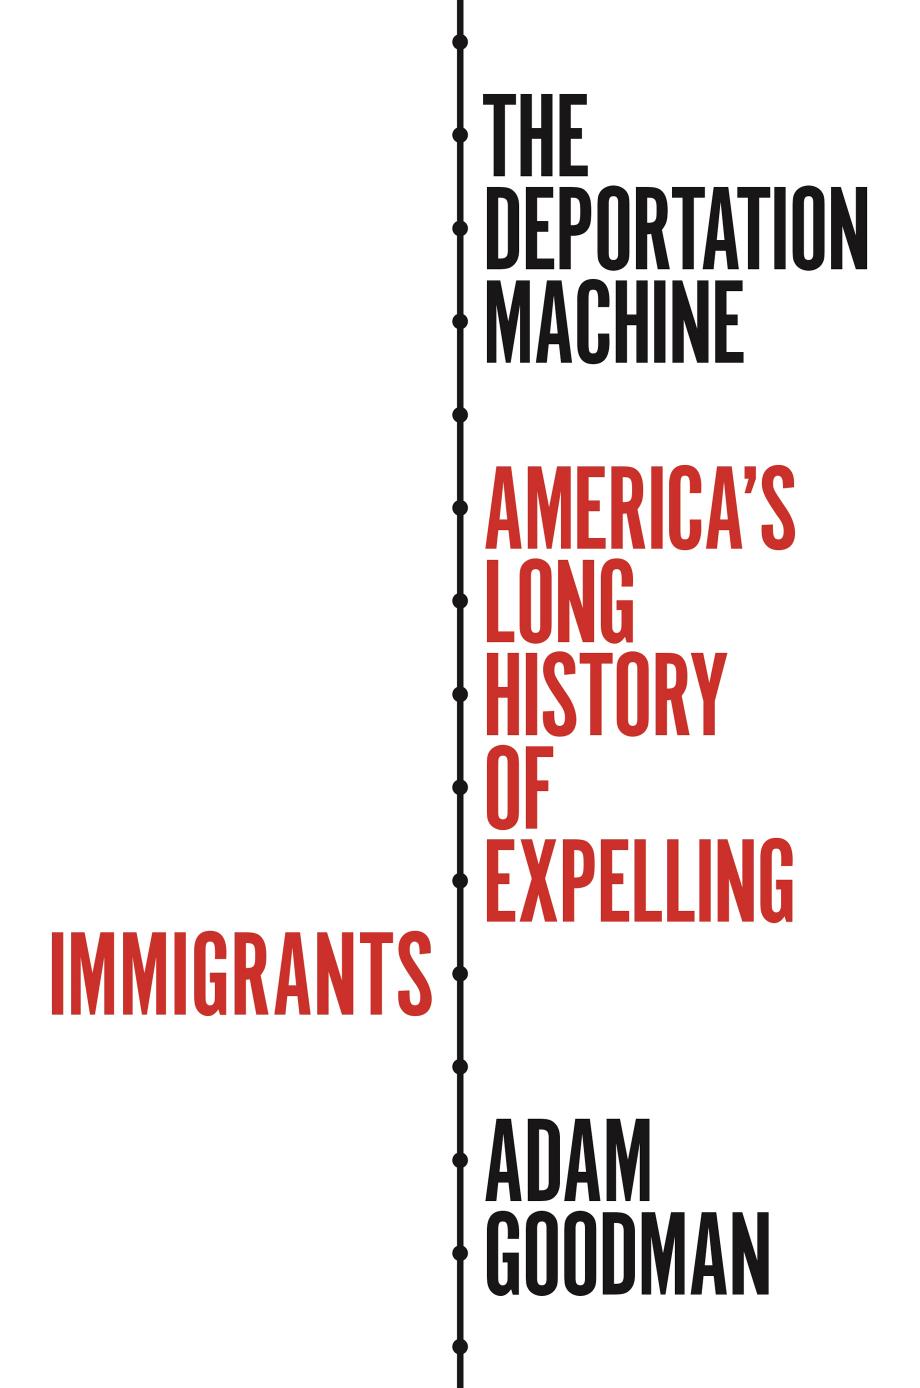 The Deportation Machine by Adam Goodman